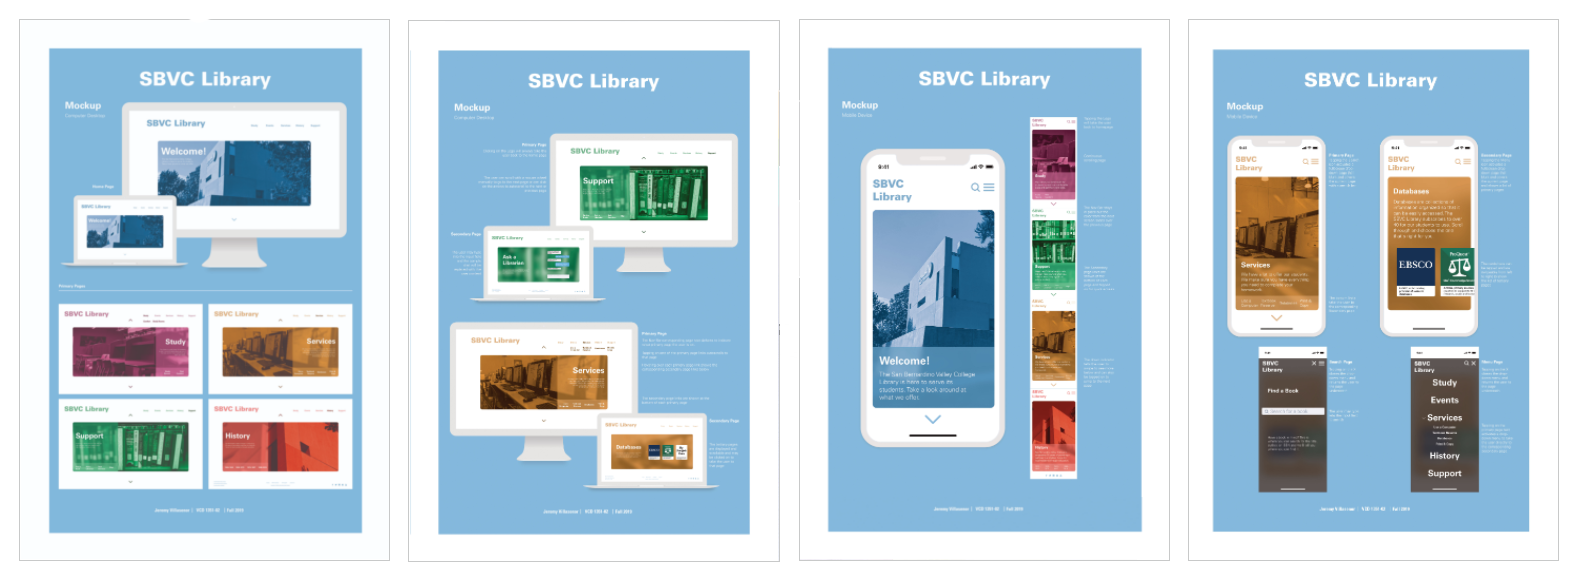 SBVC Library Website Design by Jeremy  Villasenor